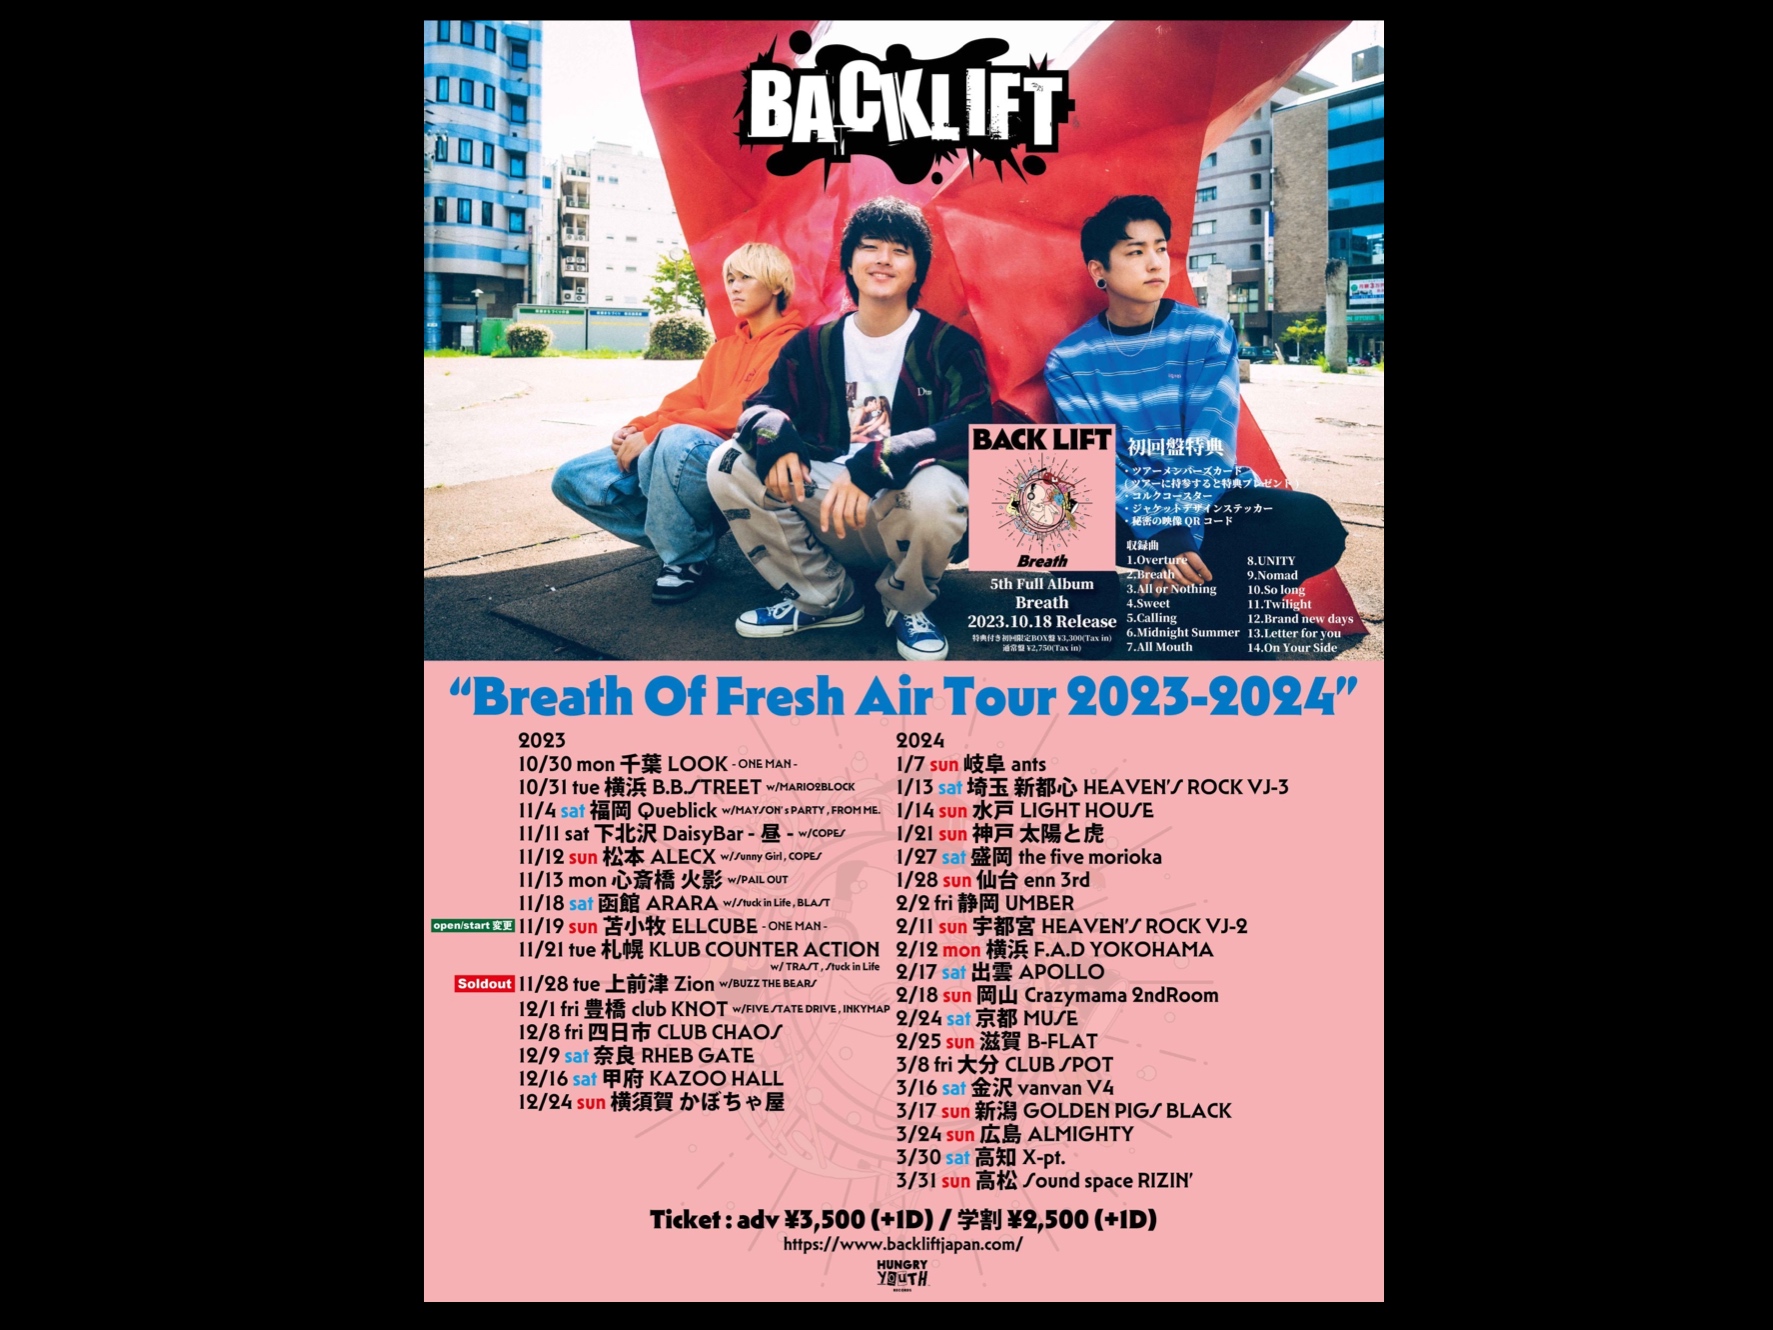 BACK LIFT presents “Breath Of Fresh Air Tour 2023-2024″